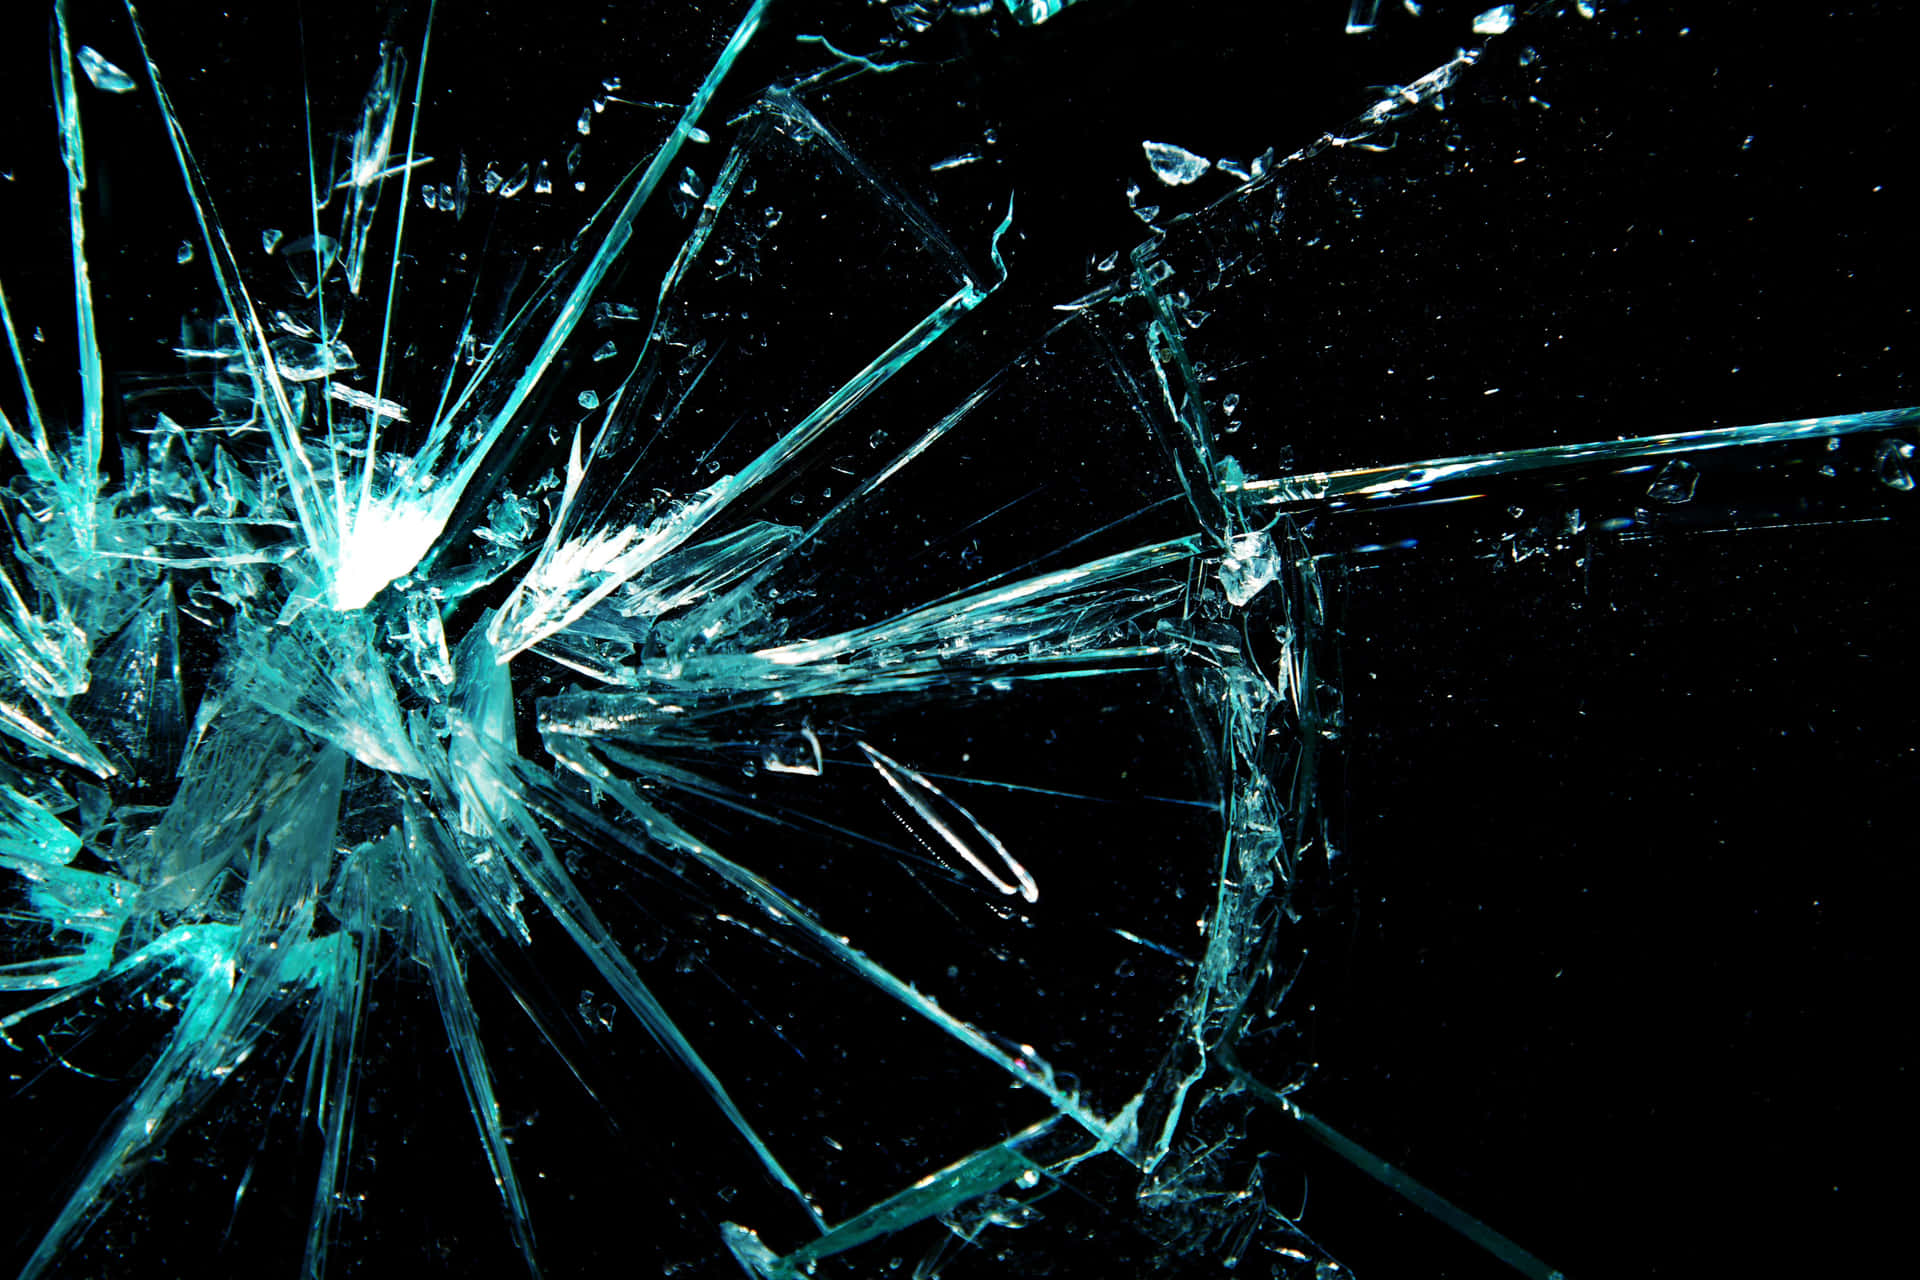 Broken Glass Photos Download The BEST Free Broken Glass Stock Photos  HD  Images